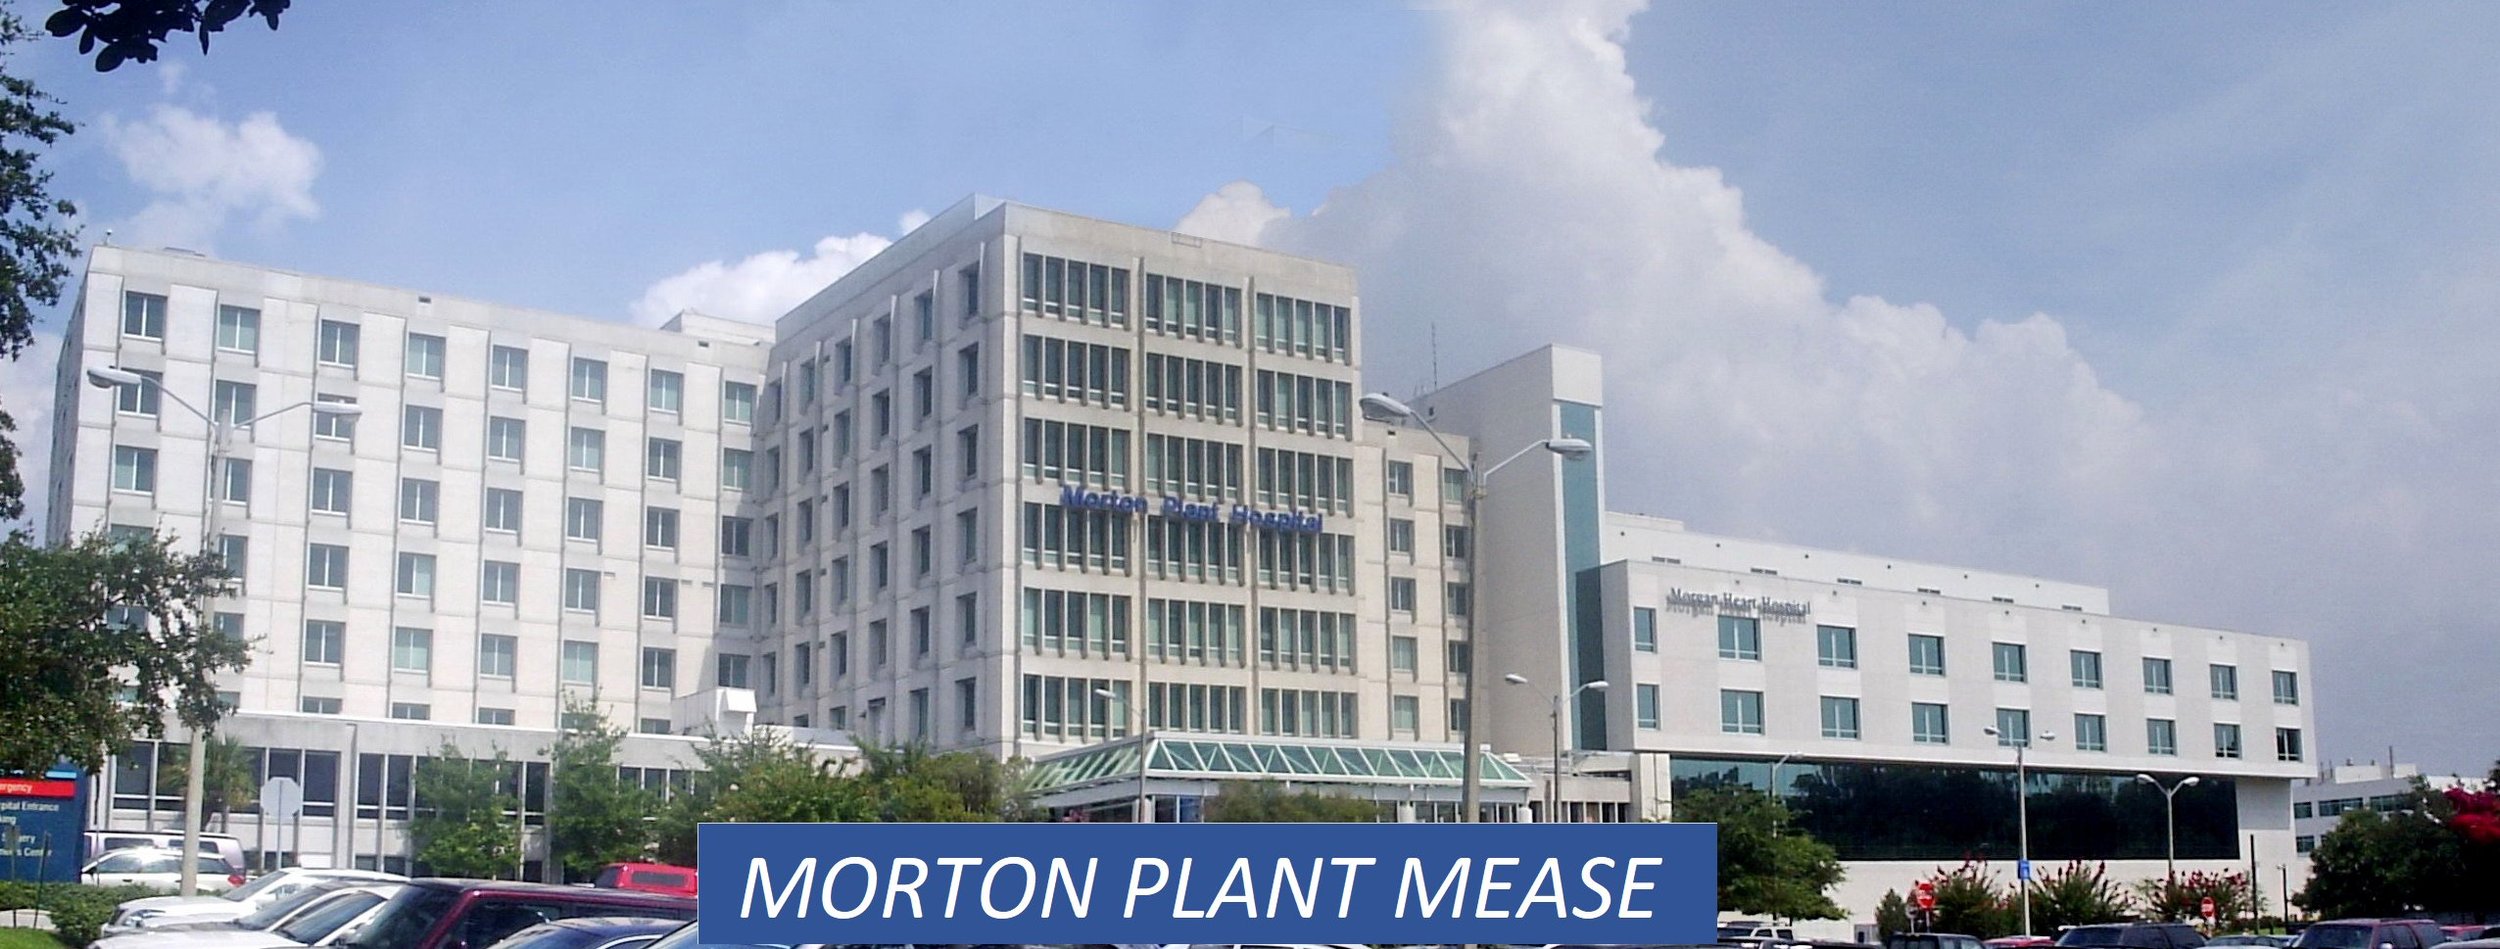 Morton_plant_hospital1.jpg